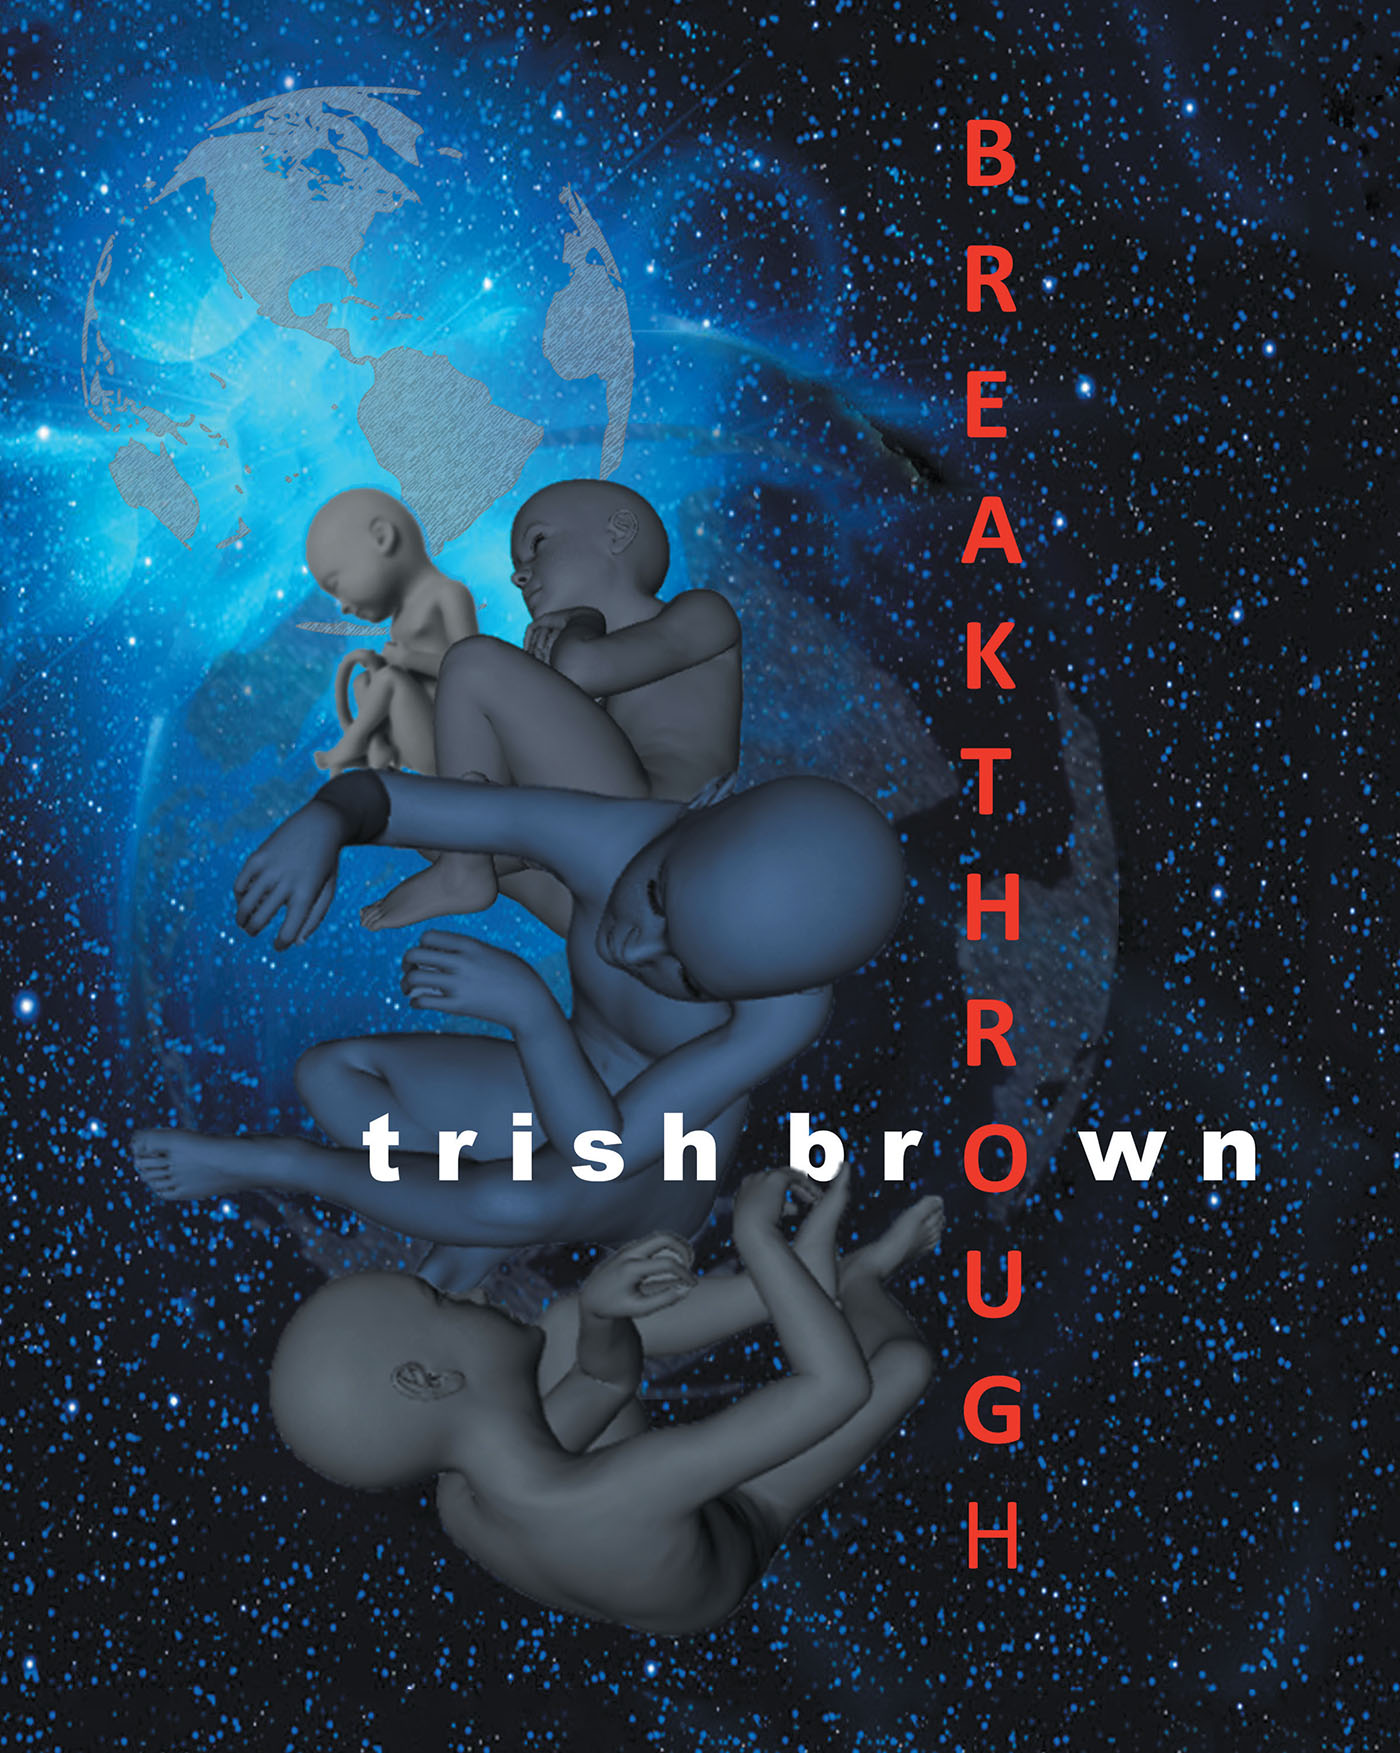 Breakthrough Cover Image